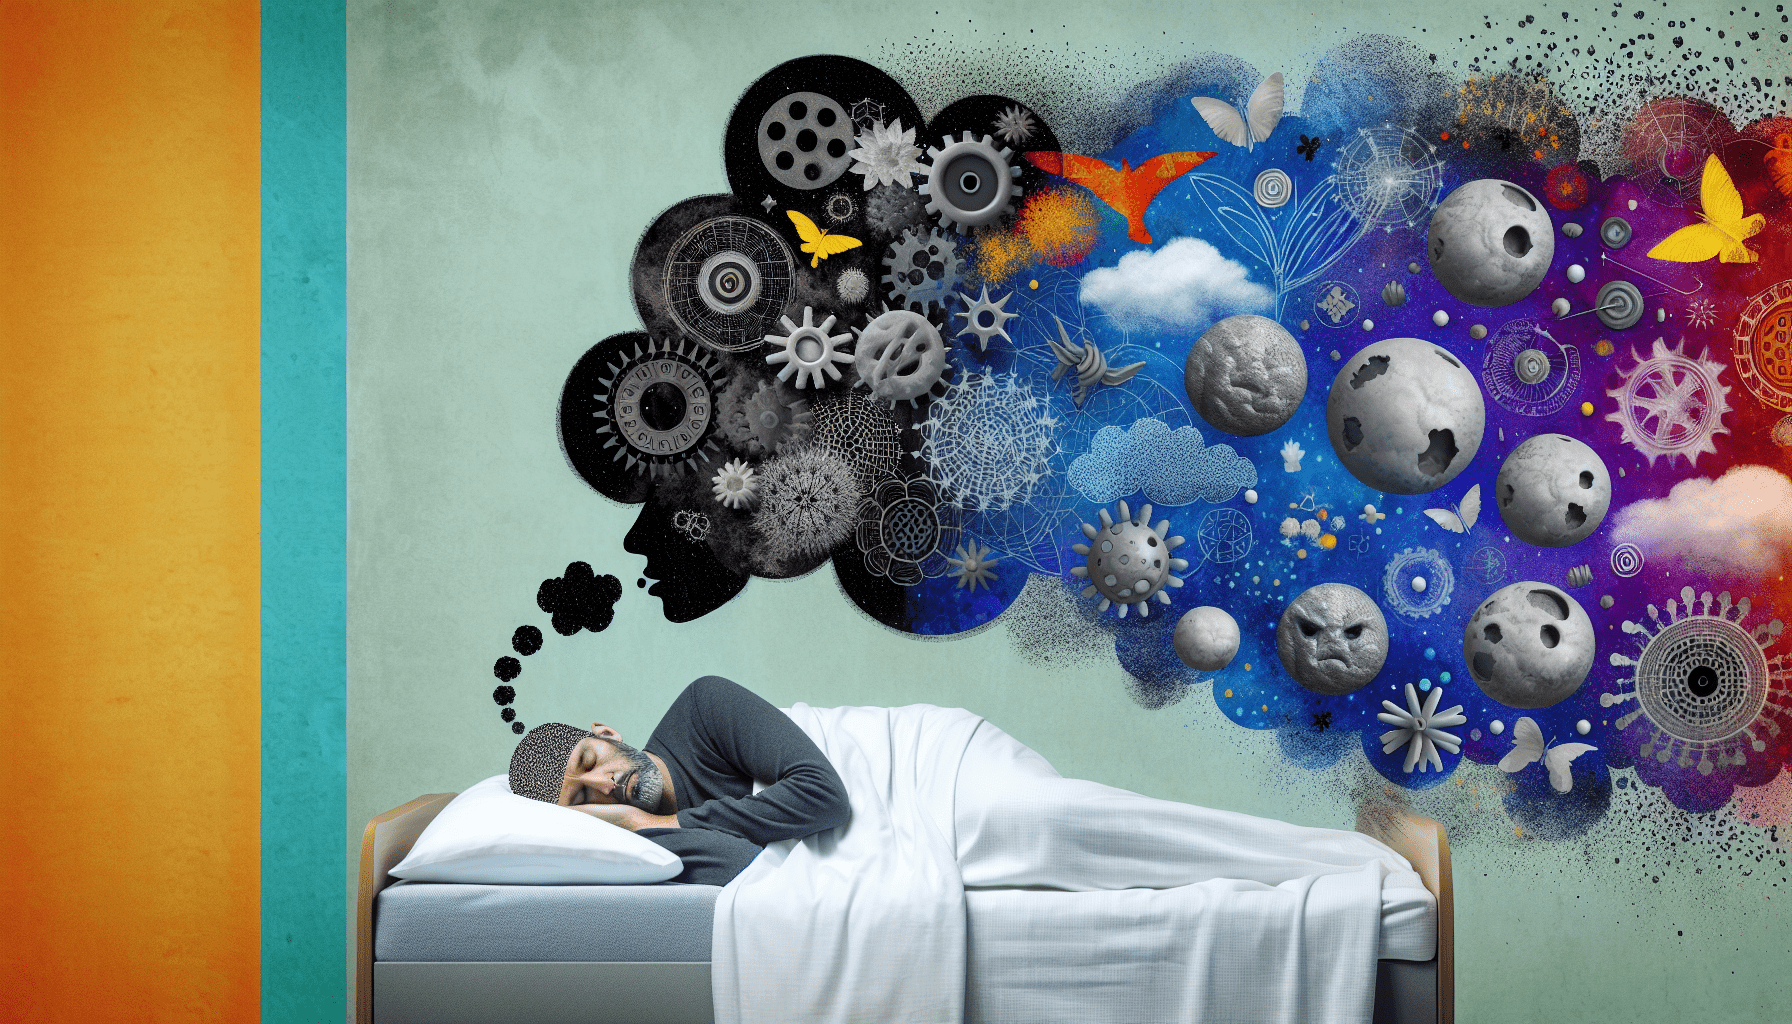 Sleep Apnea And Its Impact On Mental Health: What You Need To Know